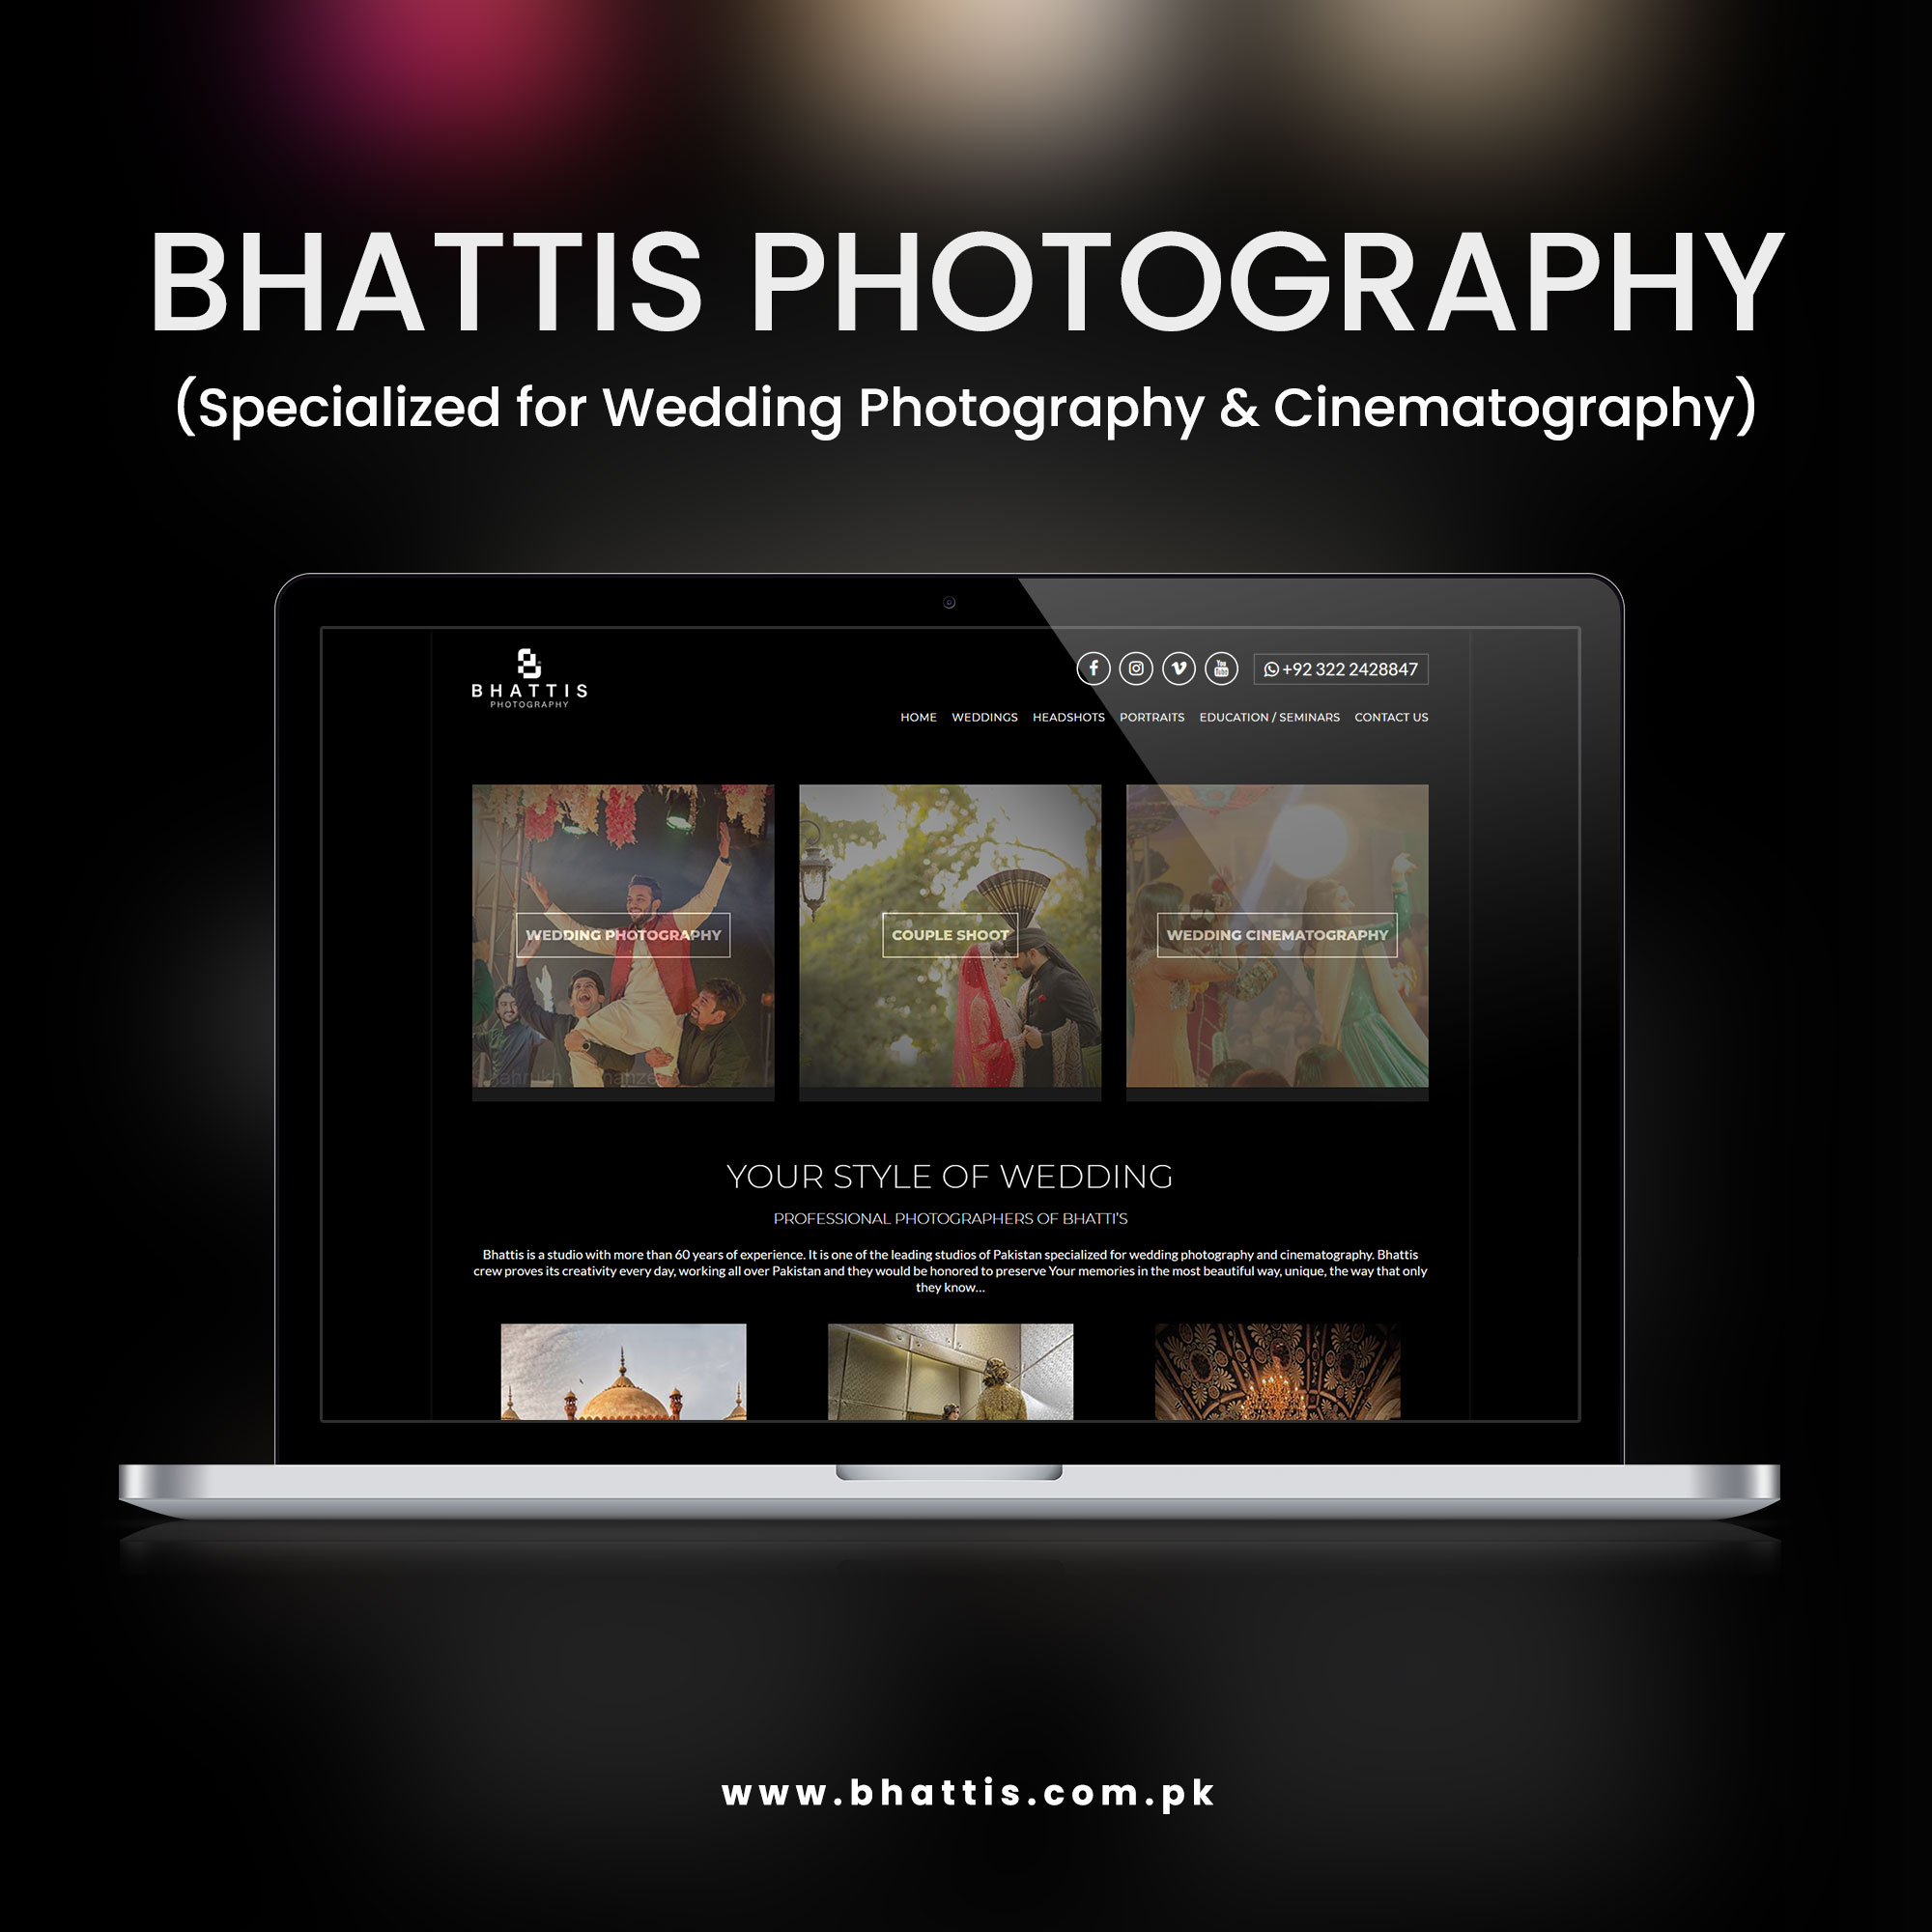 Bhattis Photography - skynetsolutionz